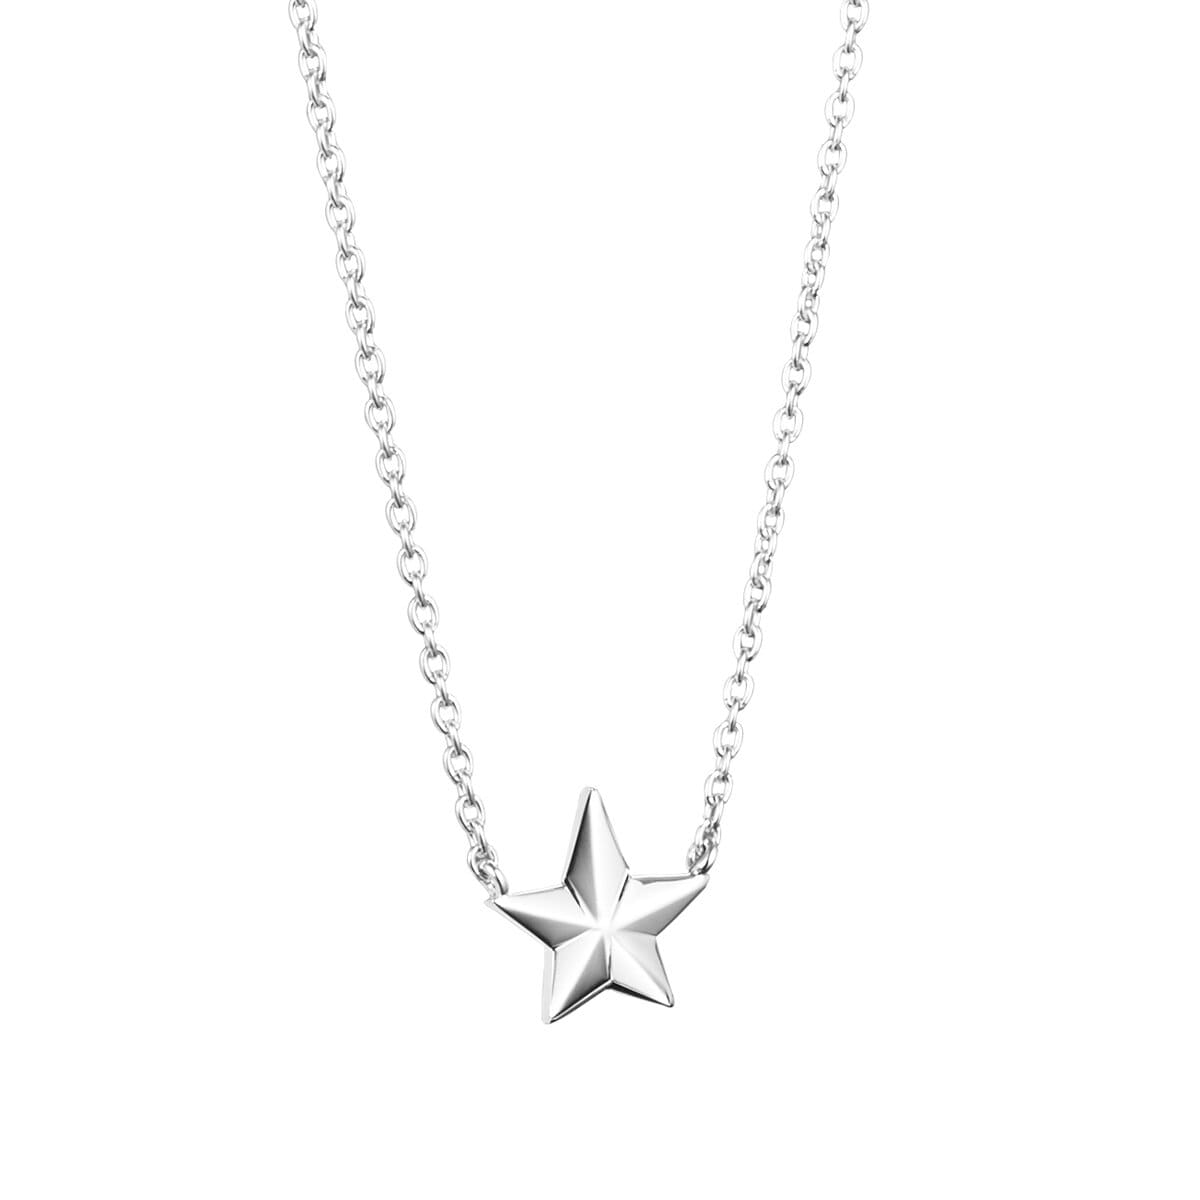 Catch a falling star single necklace